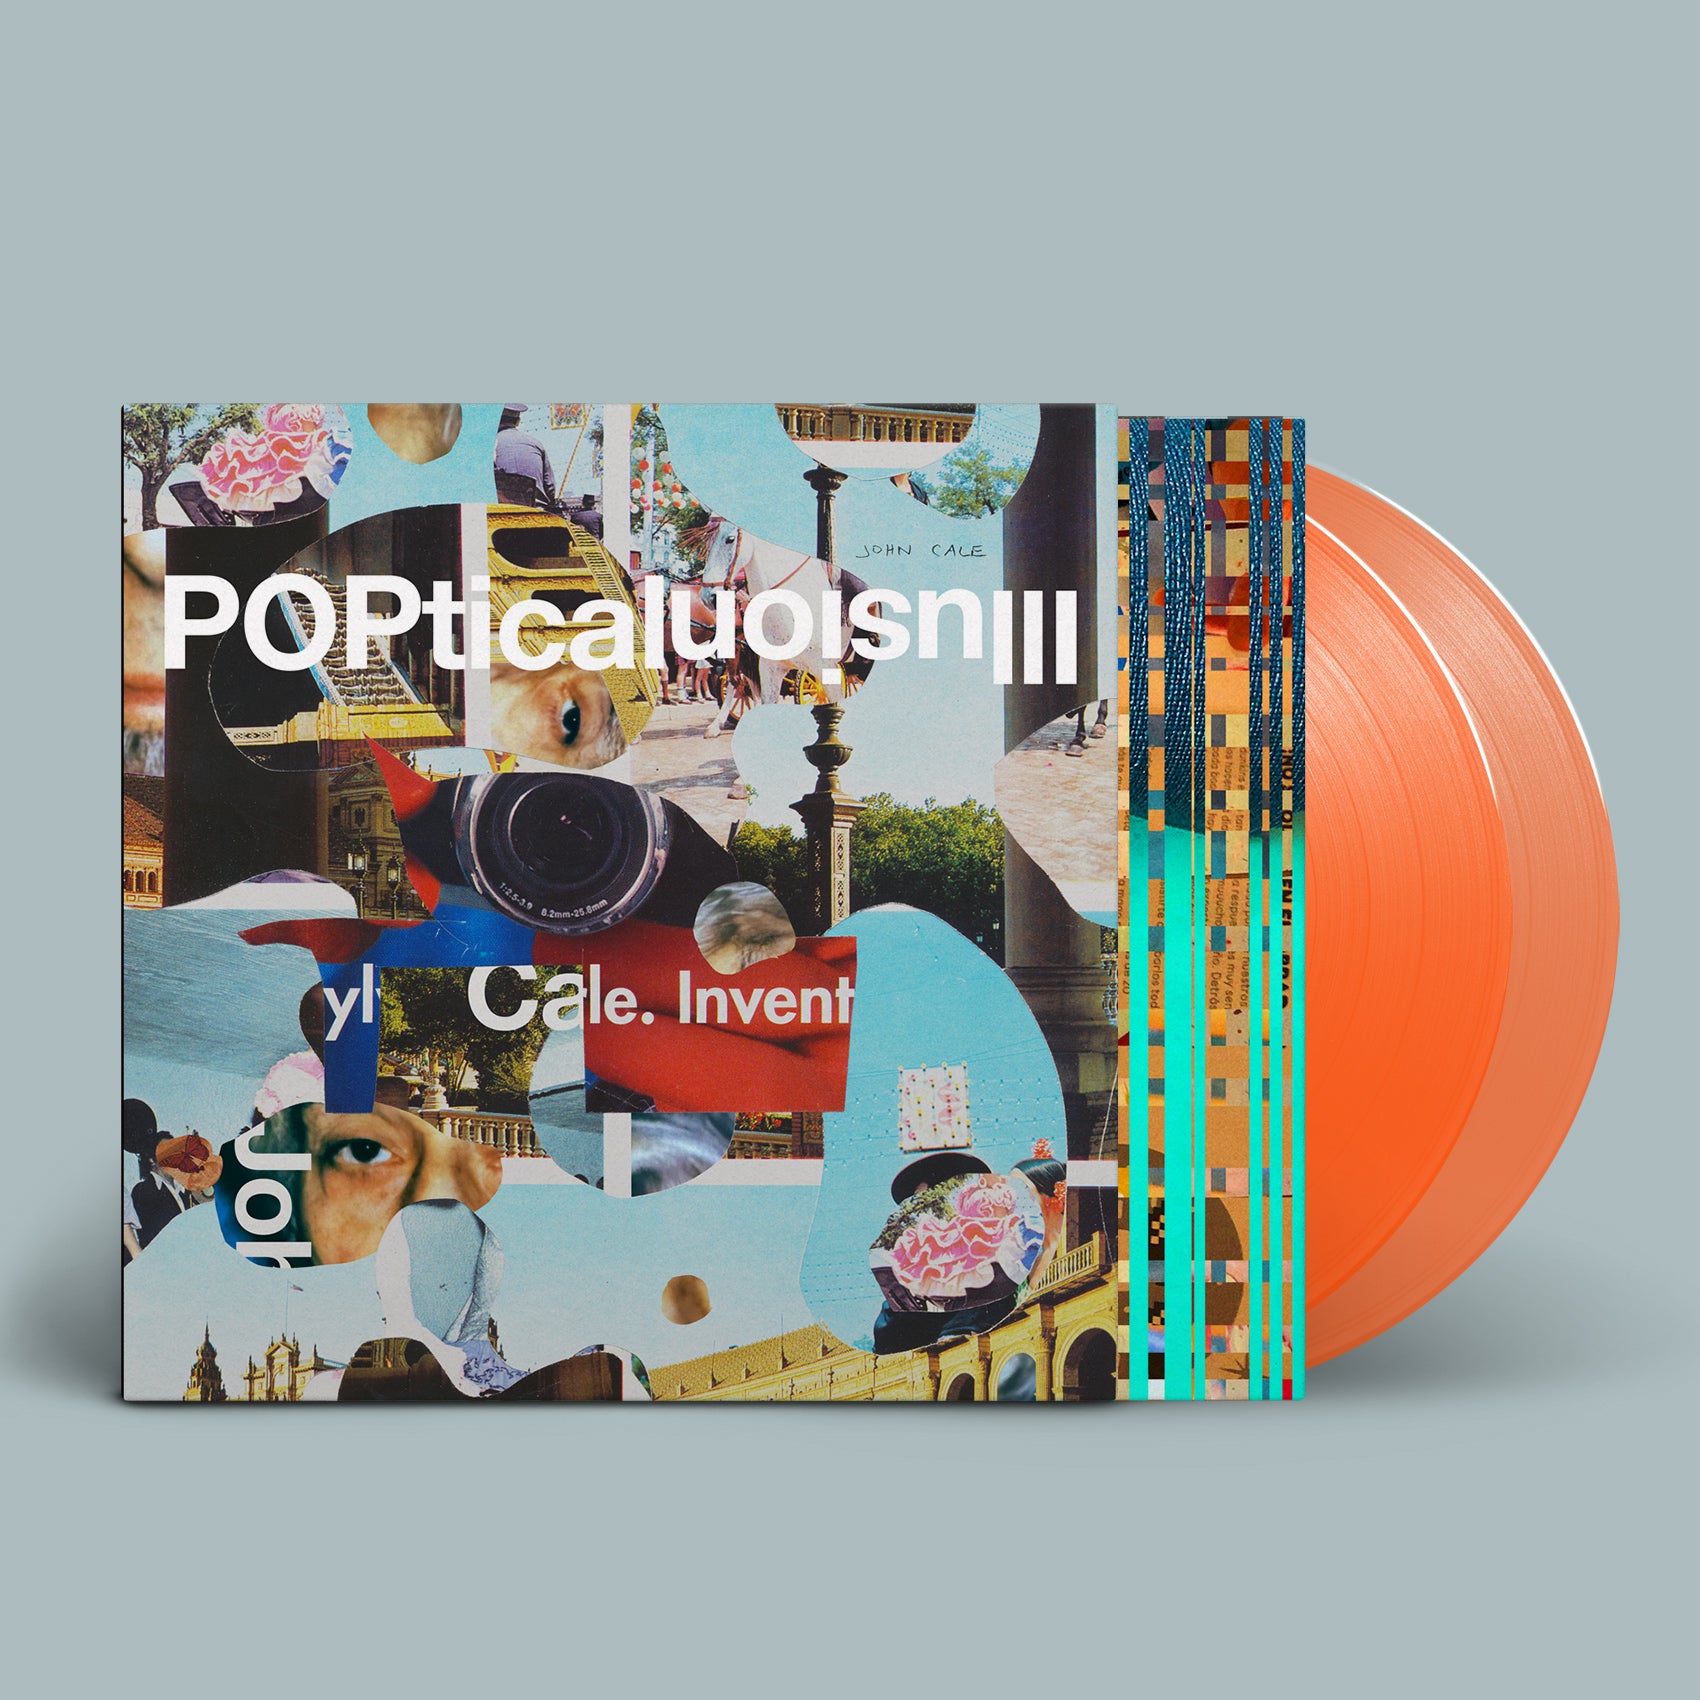 John Cale – Poptical Illusion 2LP (Limited Edition Translucent Orange Vinyl)